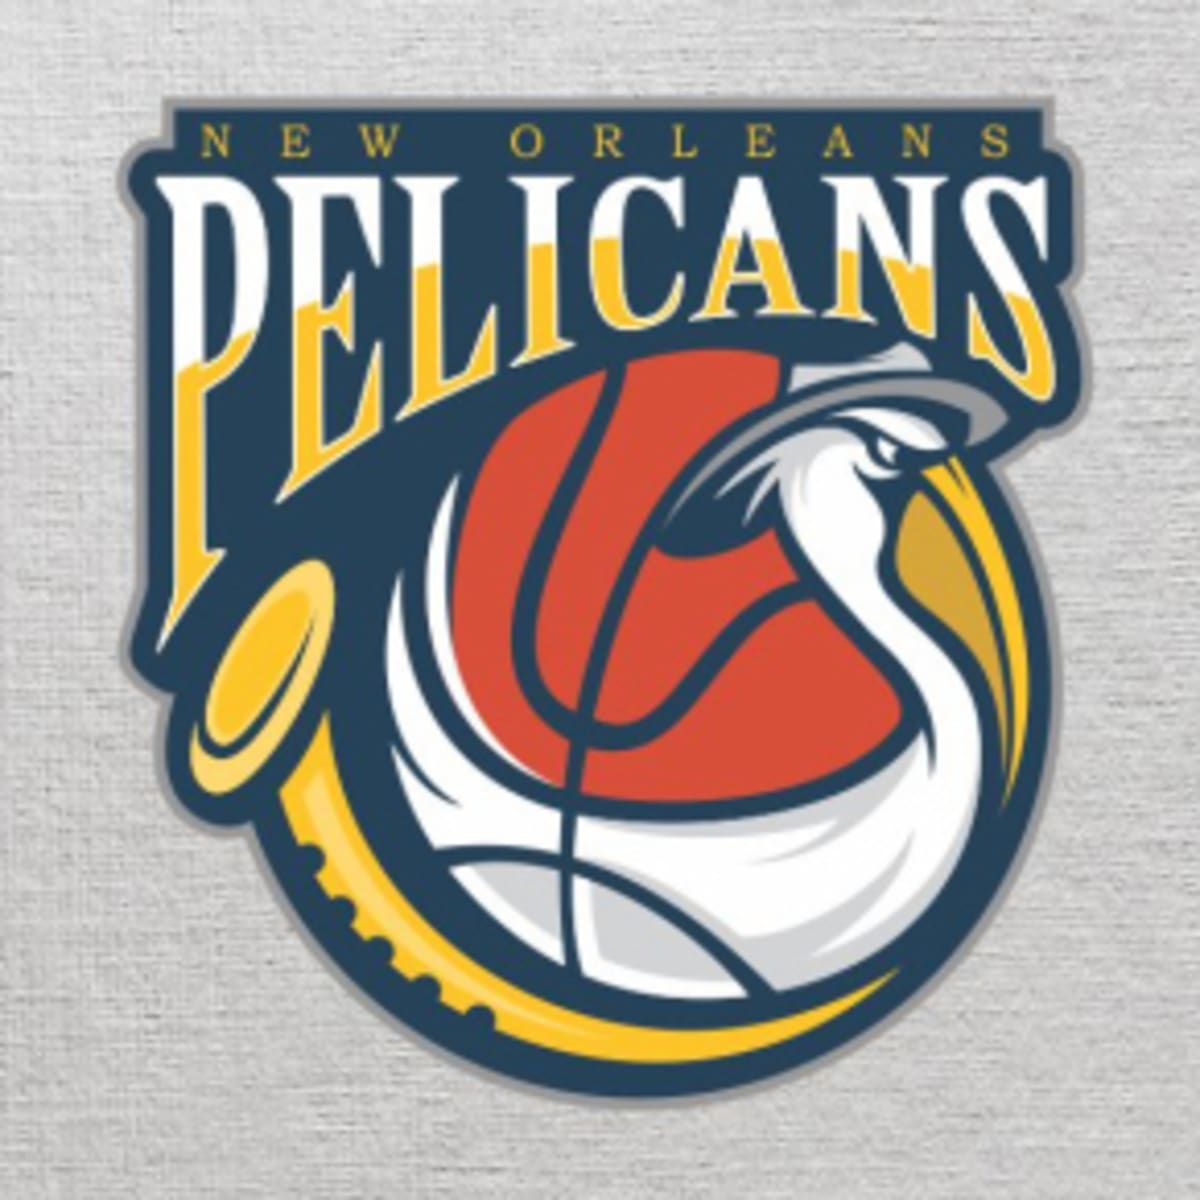 The baseball Pelicans: New Orleans' original home team